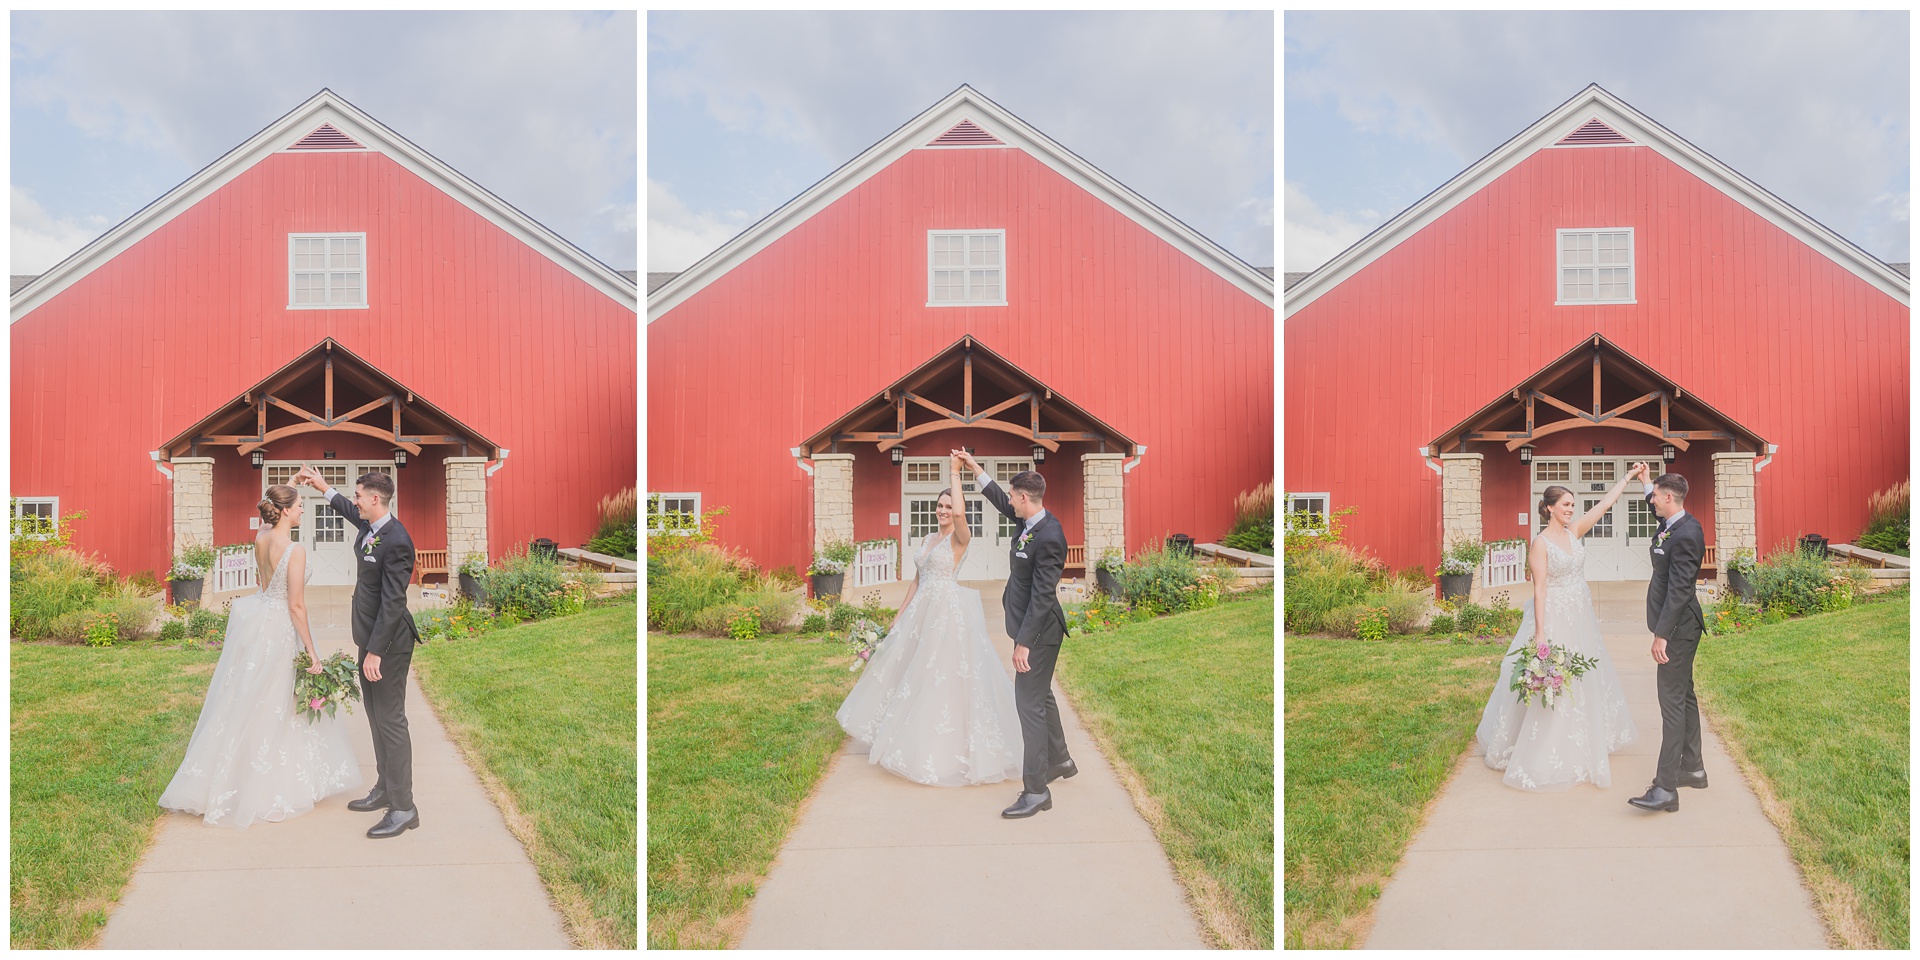 Wedding photography at The Lodge at Ironwoods in Leawood by Kansas City wedding photographers Wisdom-Watson Weddings.